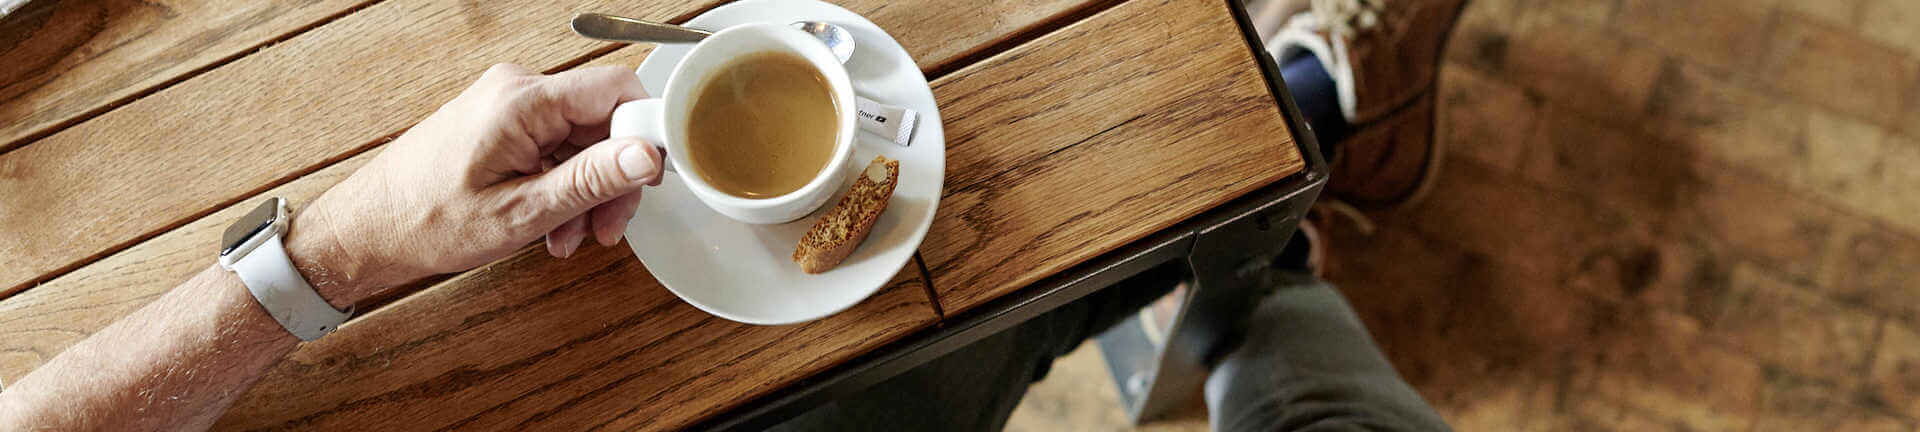 Kaffee Crema im Café trinken